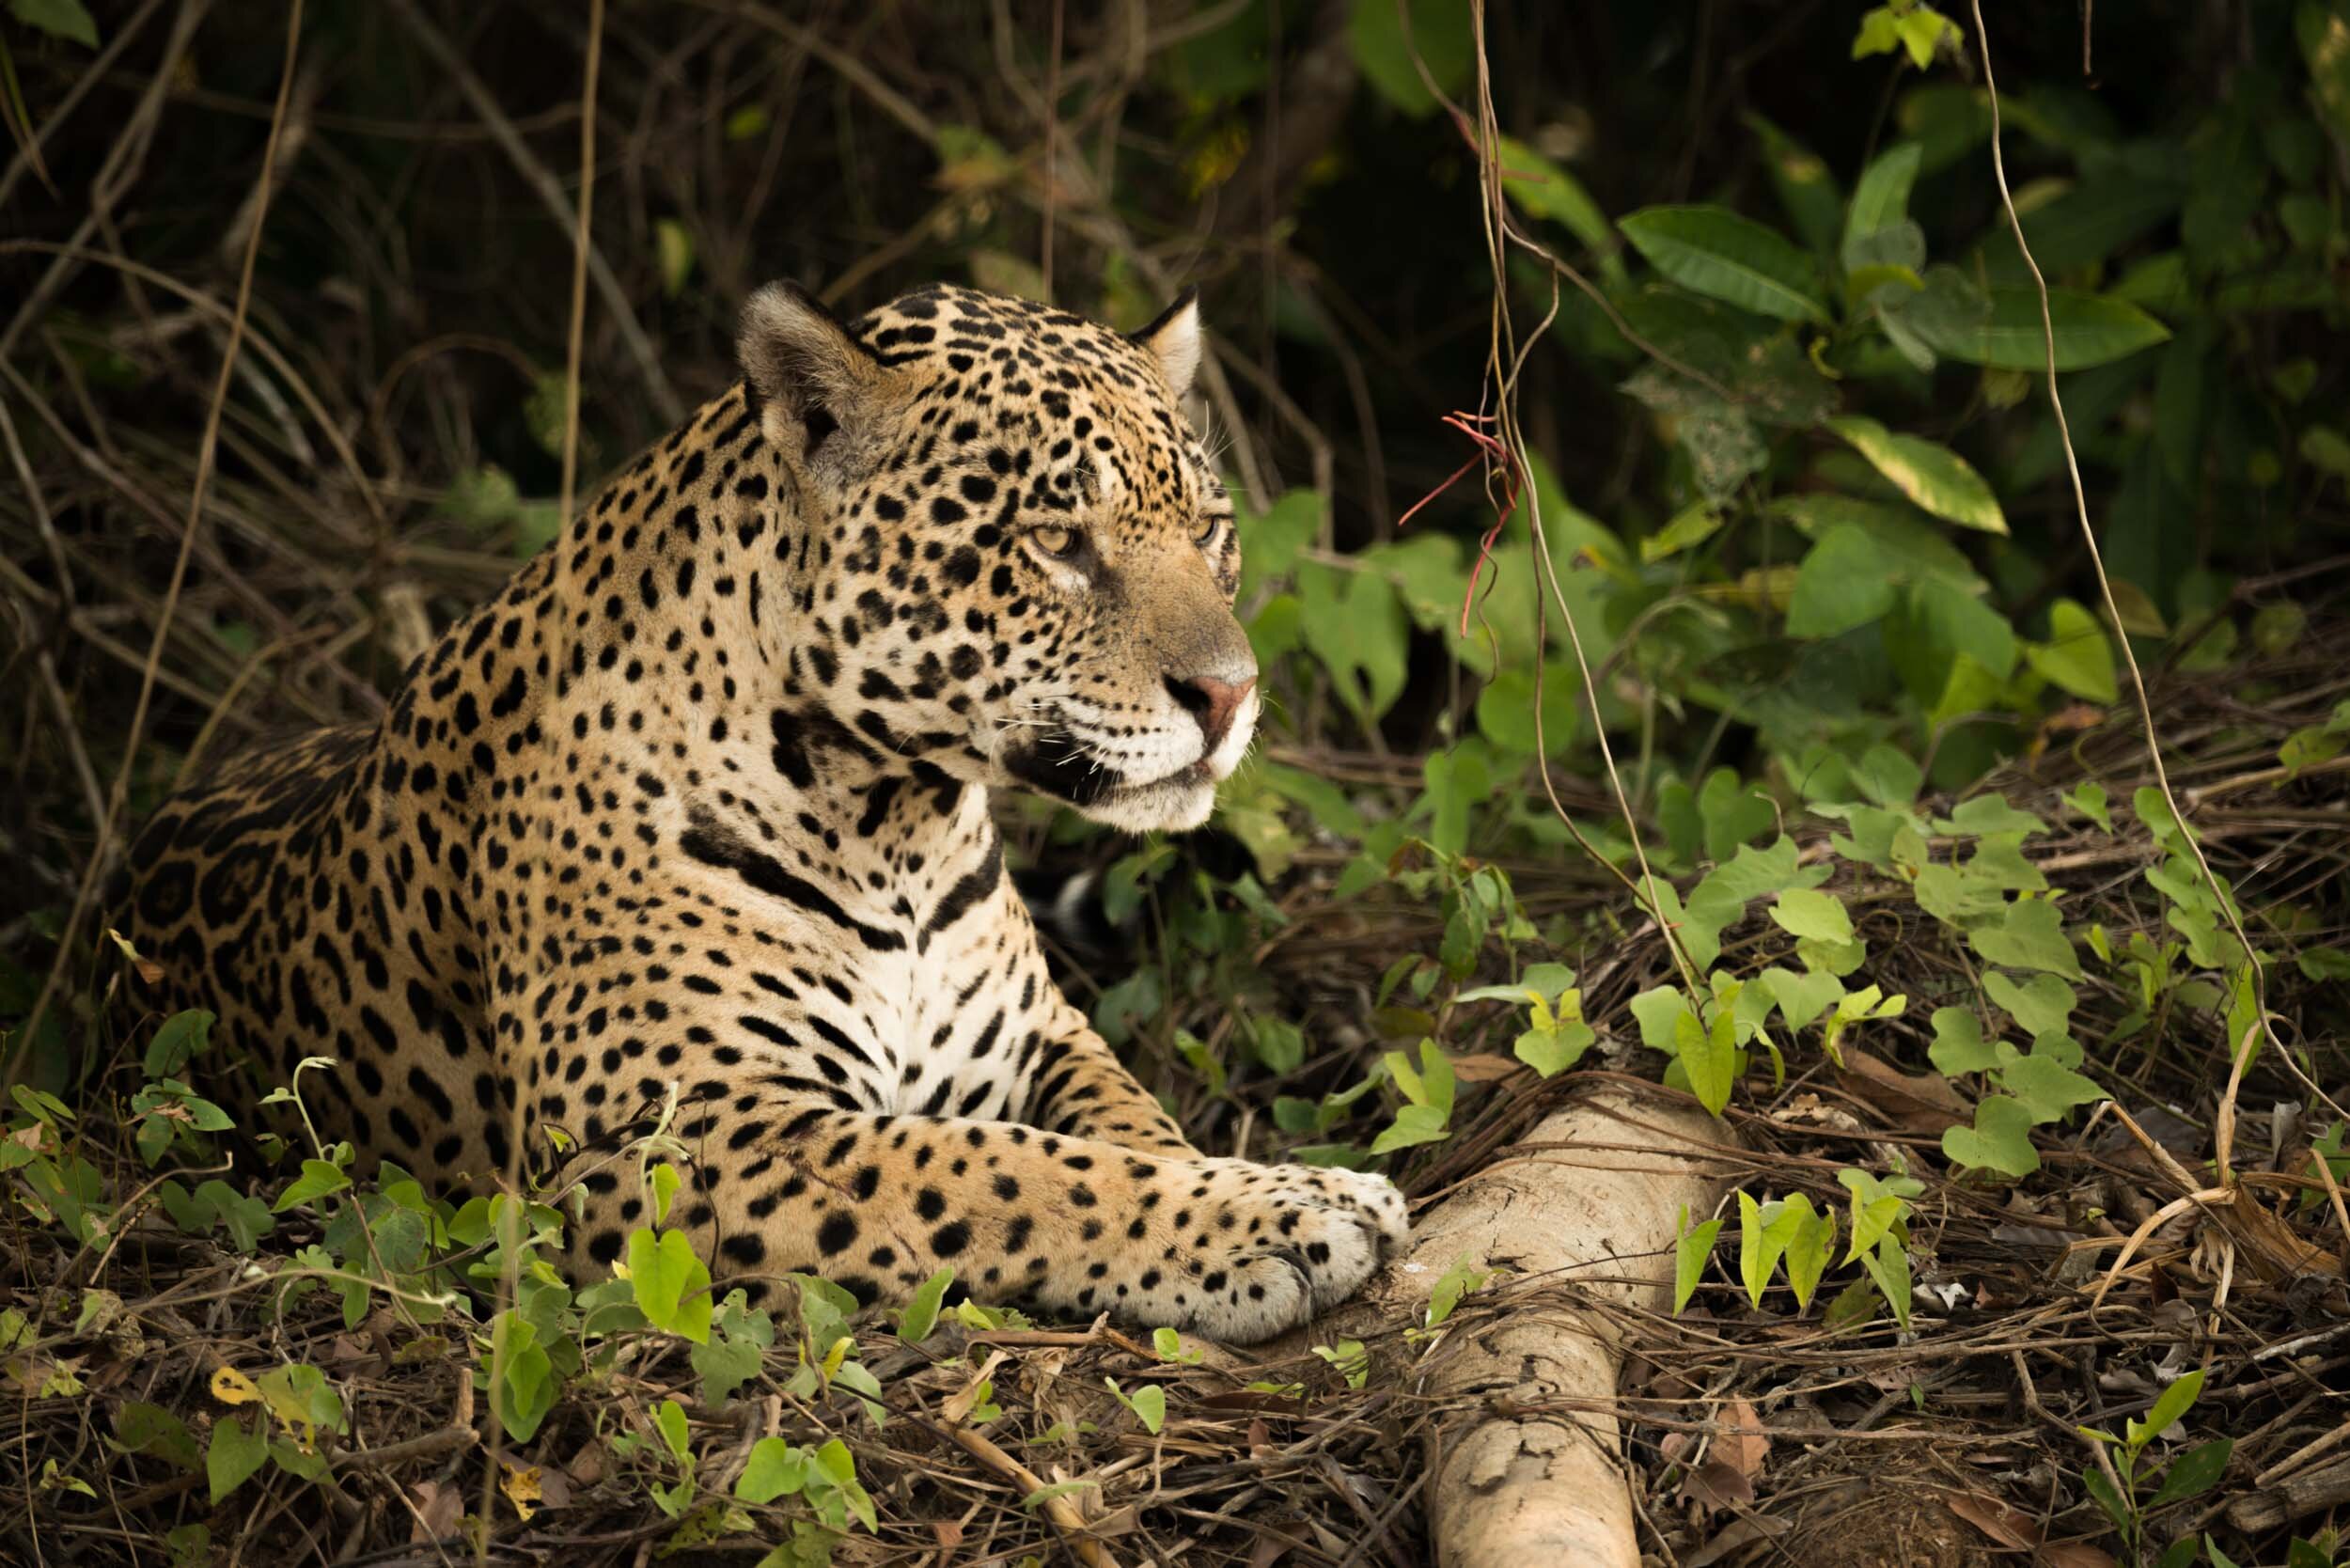 Jaguar lying by log in dense undergrowth: 110 downloads